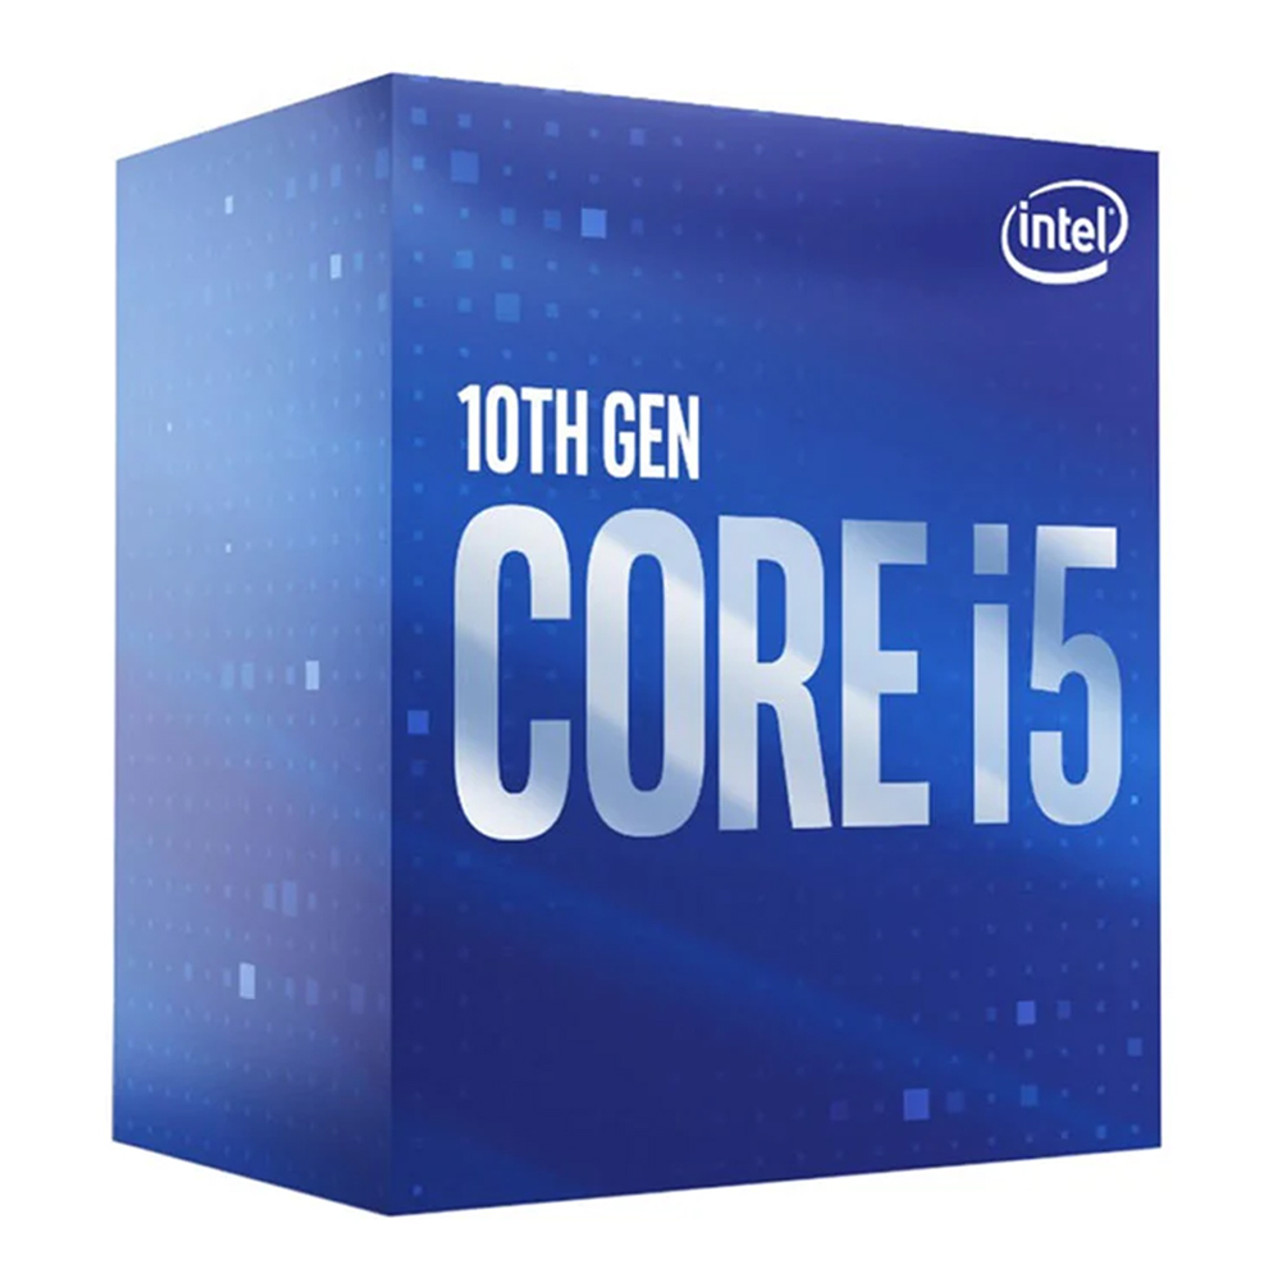 Intel Core i5-10400F Processor (10th Gen) 6-Core 2.9GHz LGA1200 65W Desktop CPU BX8070110400F